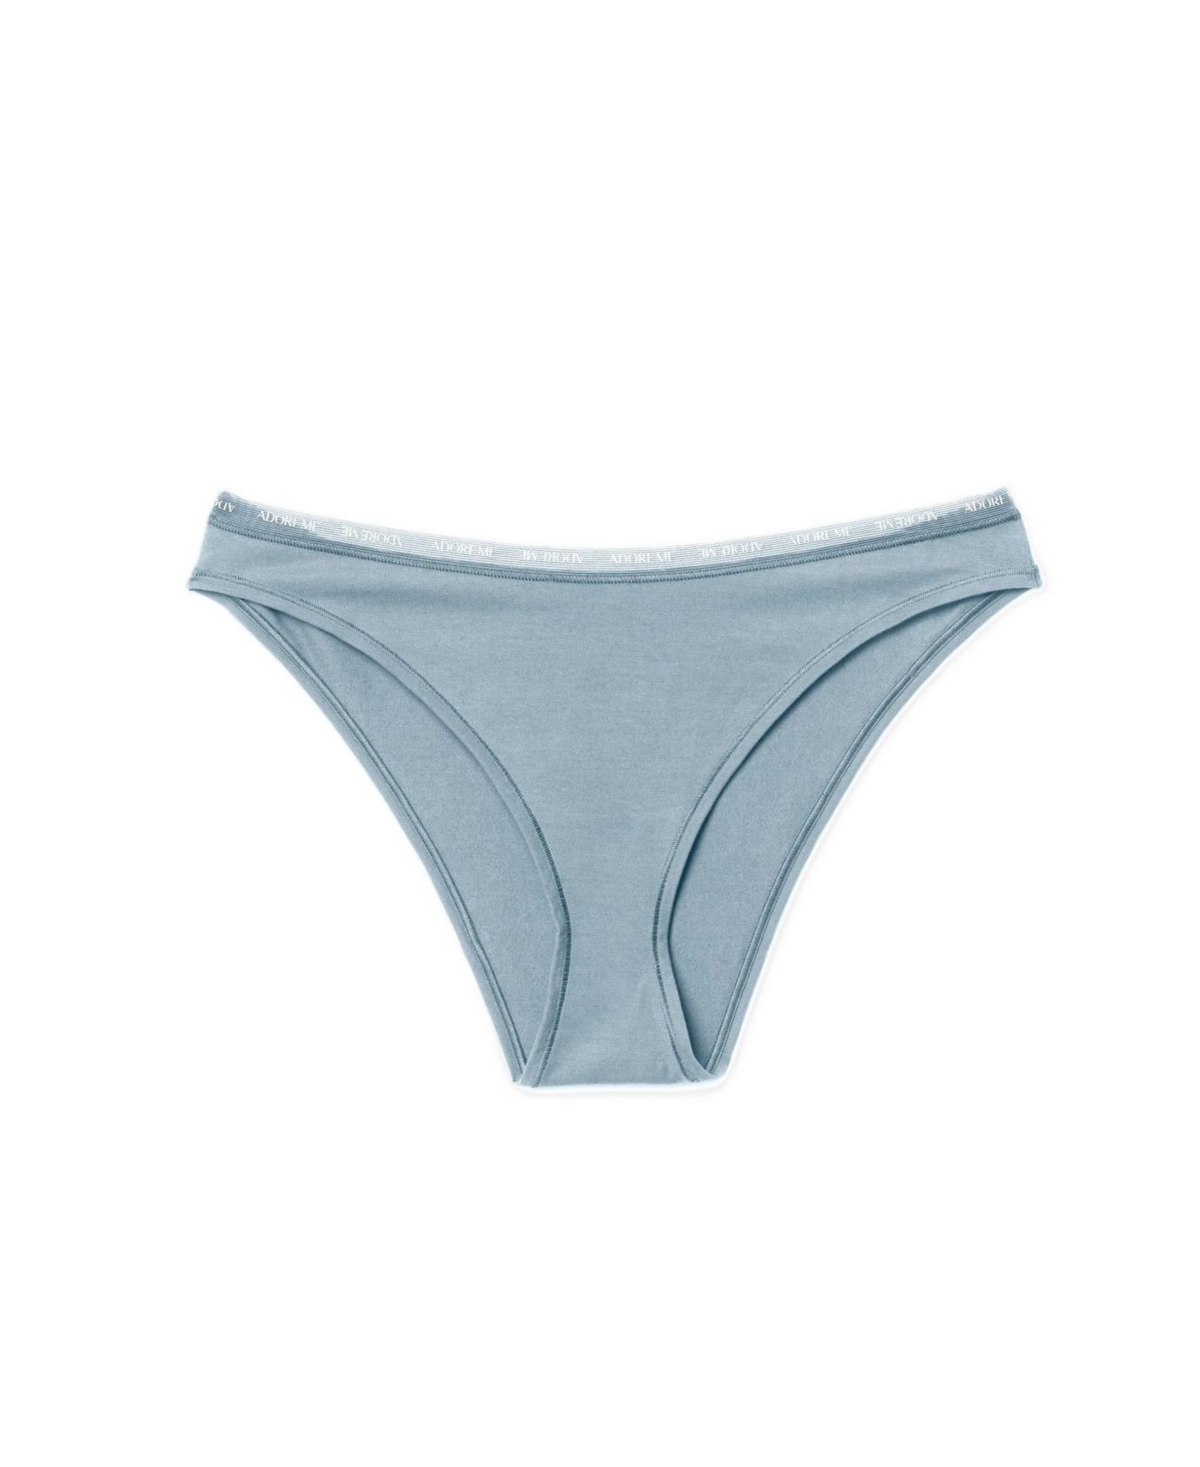 Maddey Women's Plus-Size Brazilian Panty - Medium blue